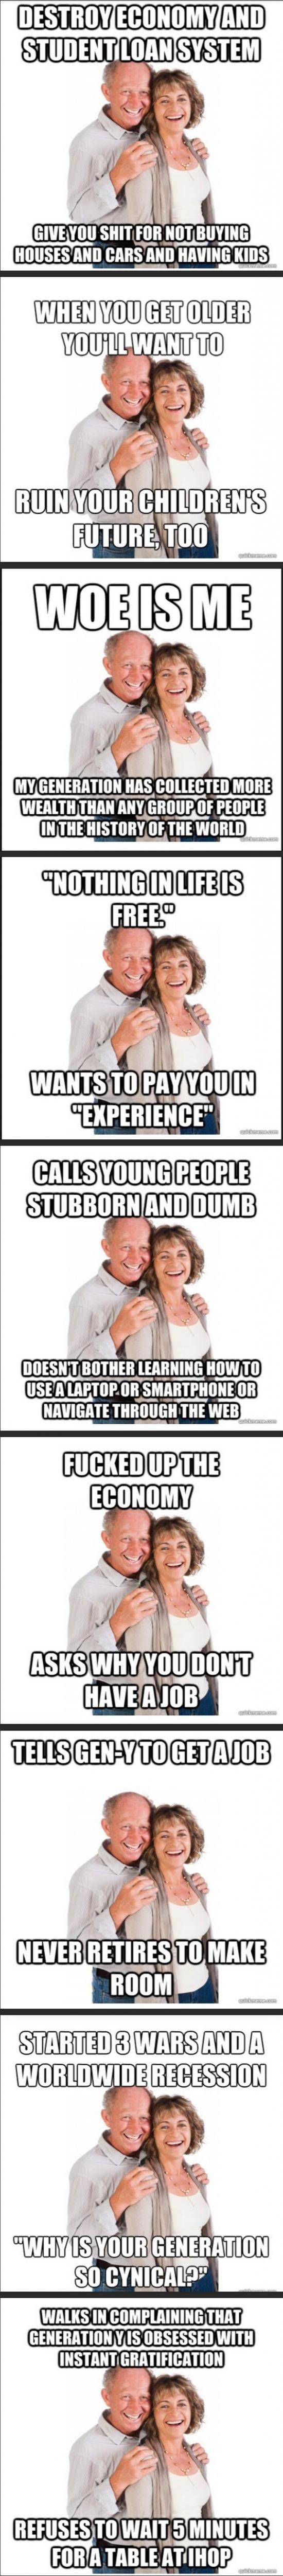 Scumbag baby boomers